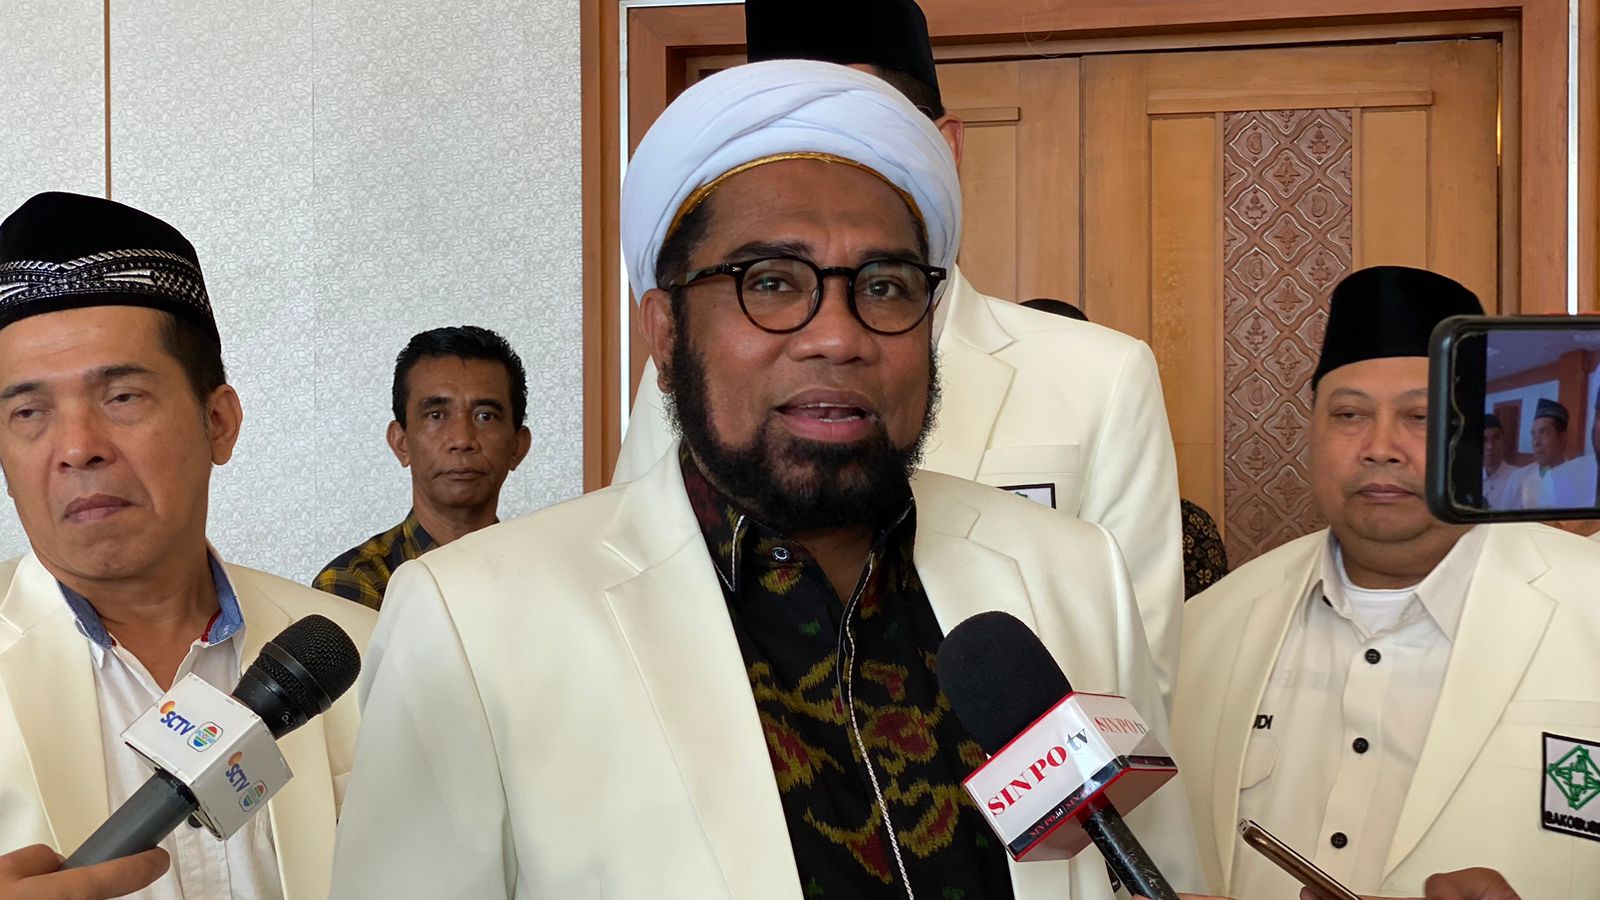 Ali Mochtar Ngabalin Sebut Presiden Siap Ganti Panglima TNI, Tinggal Tunggu Waktu